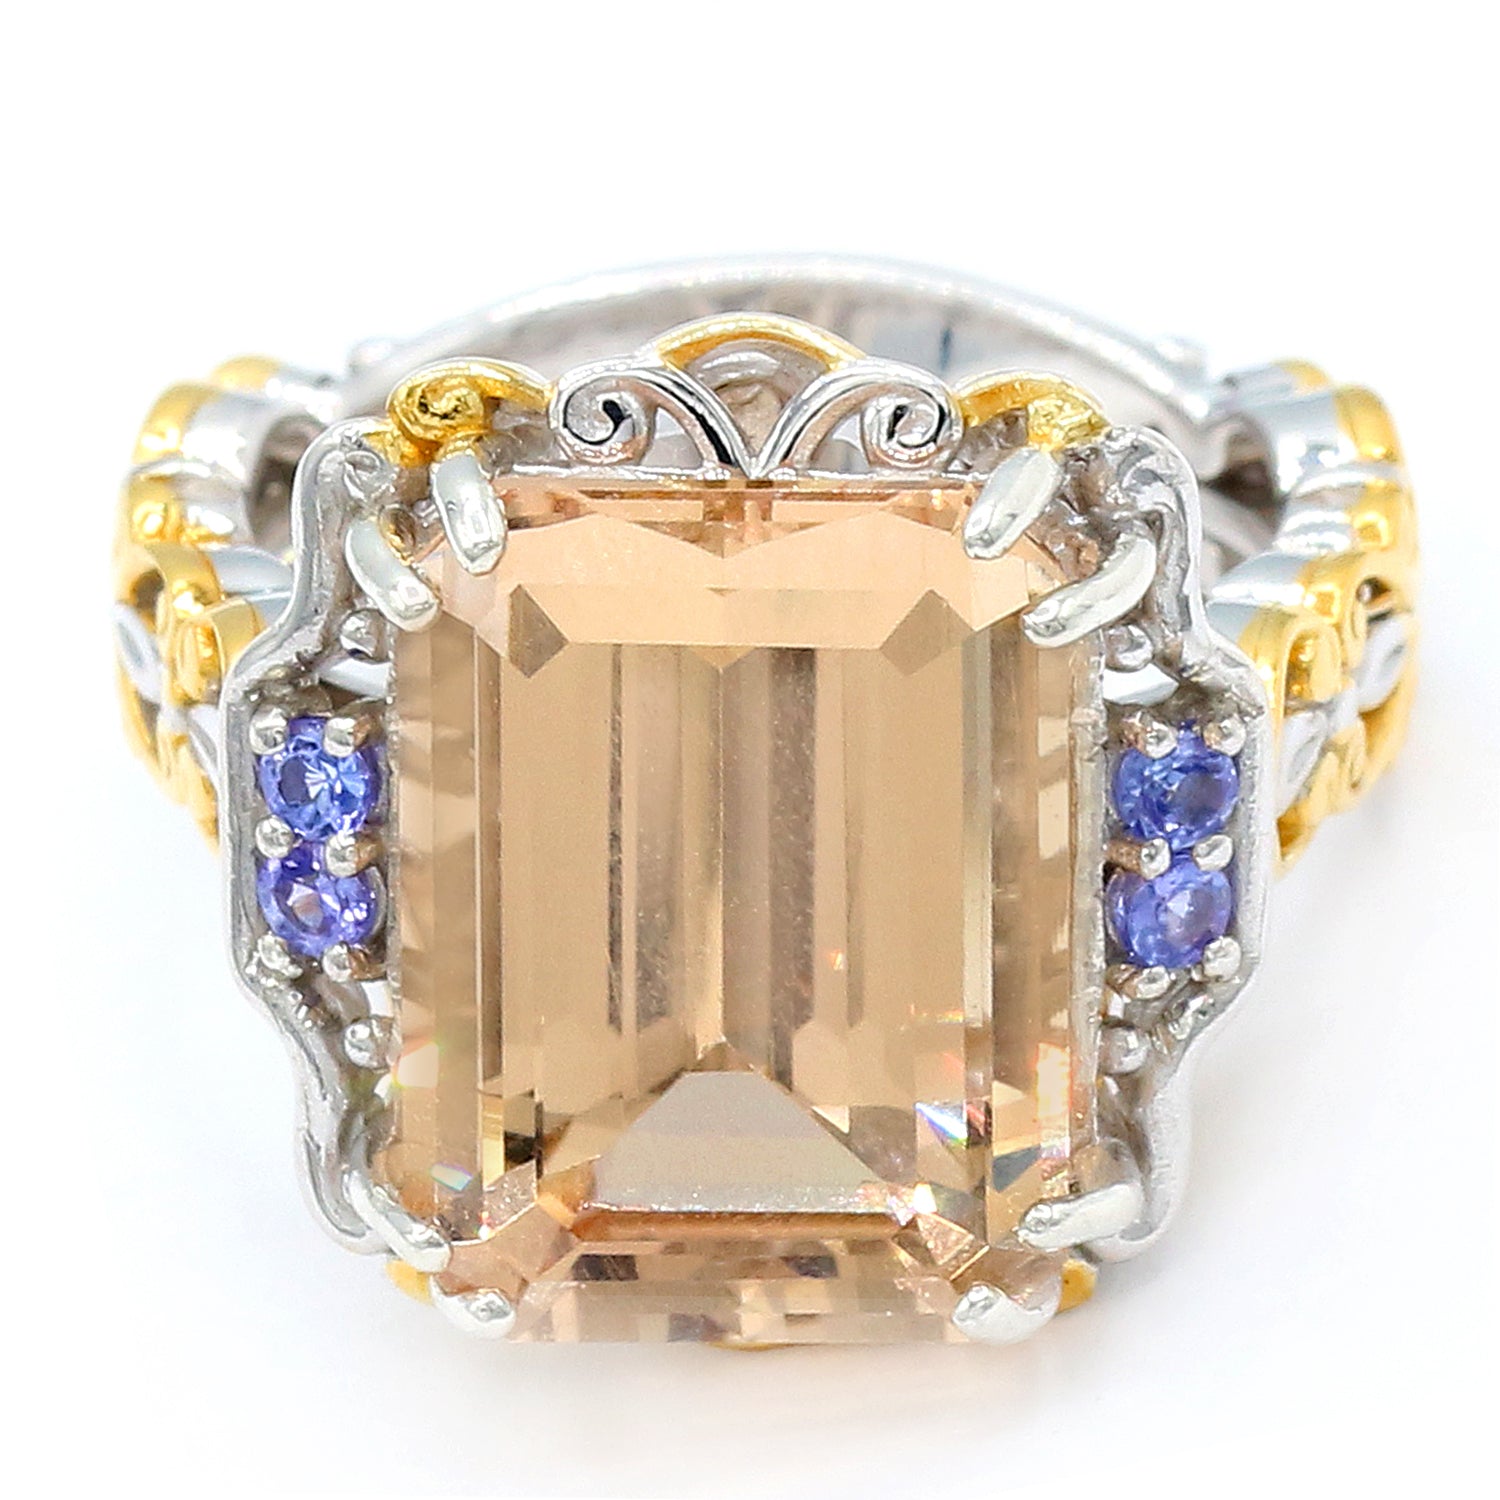 Limited Edition Gems en Vogue 8.78ctw Peach Morganite & Tanzanite Ring